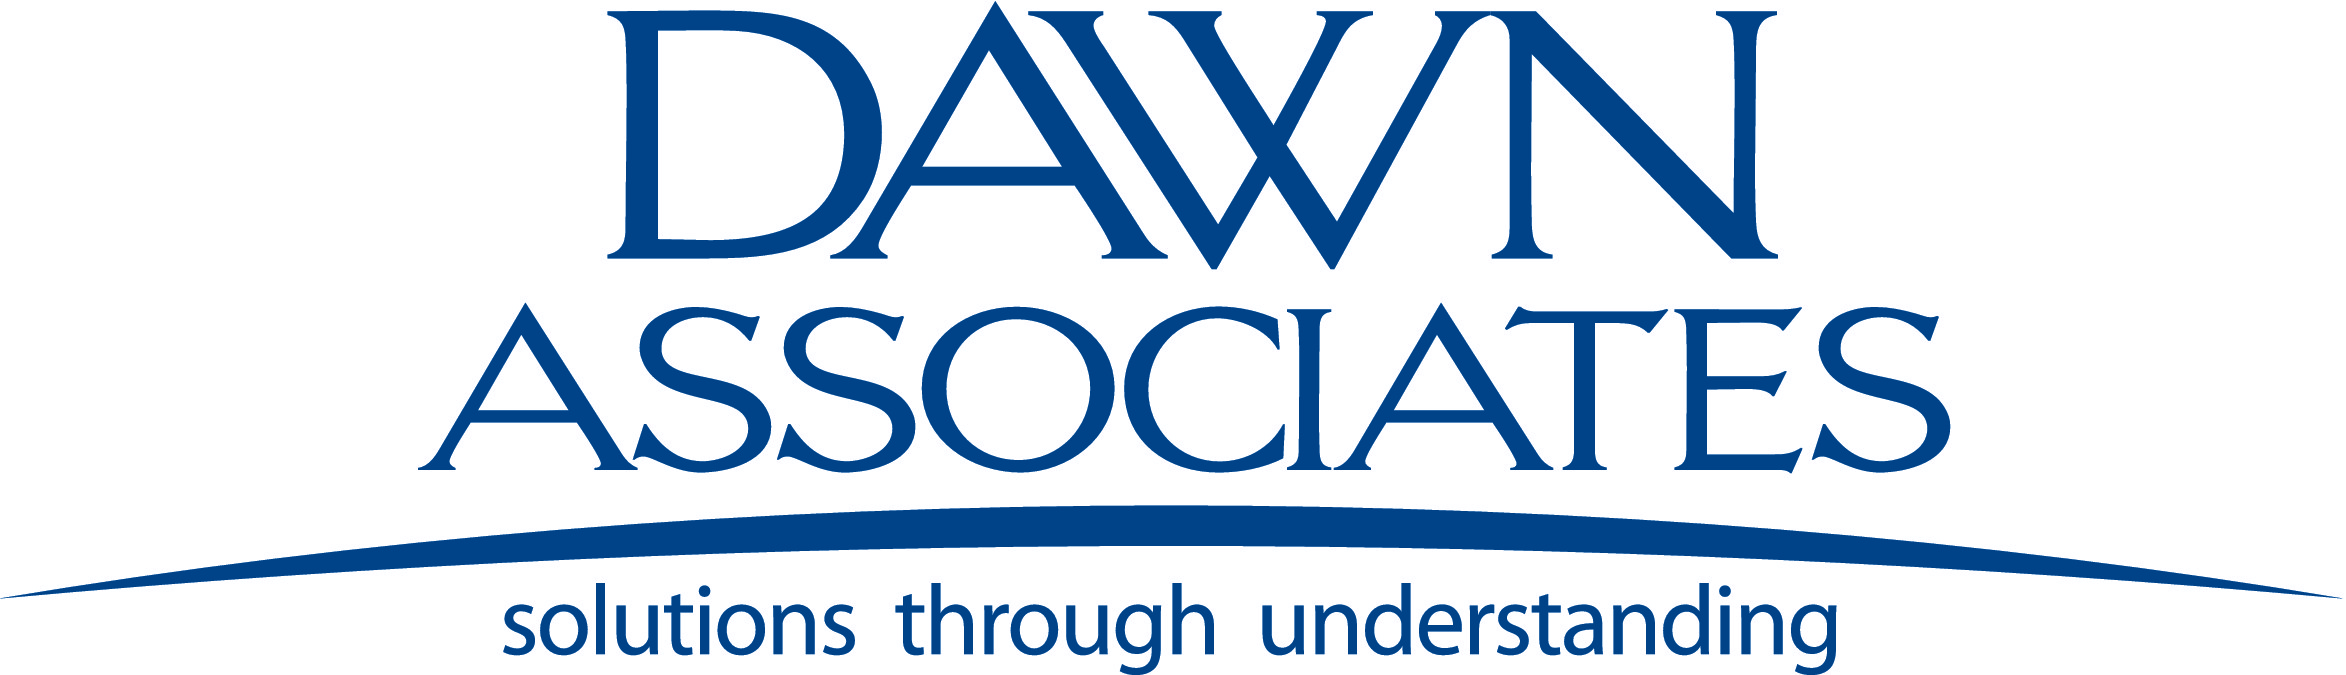 Dawn Associates